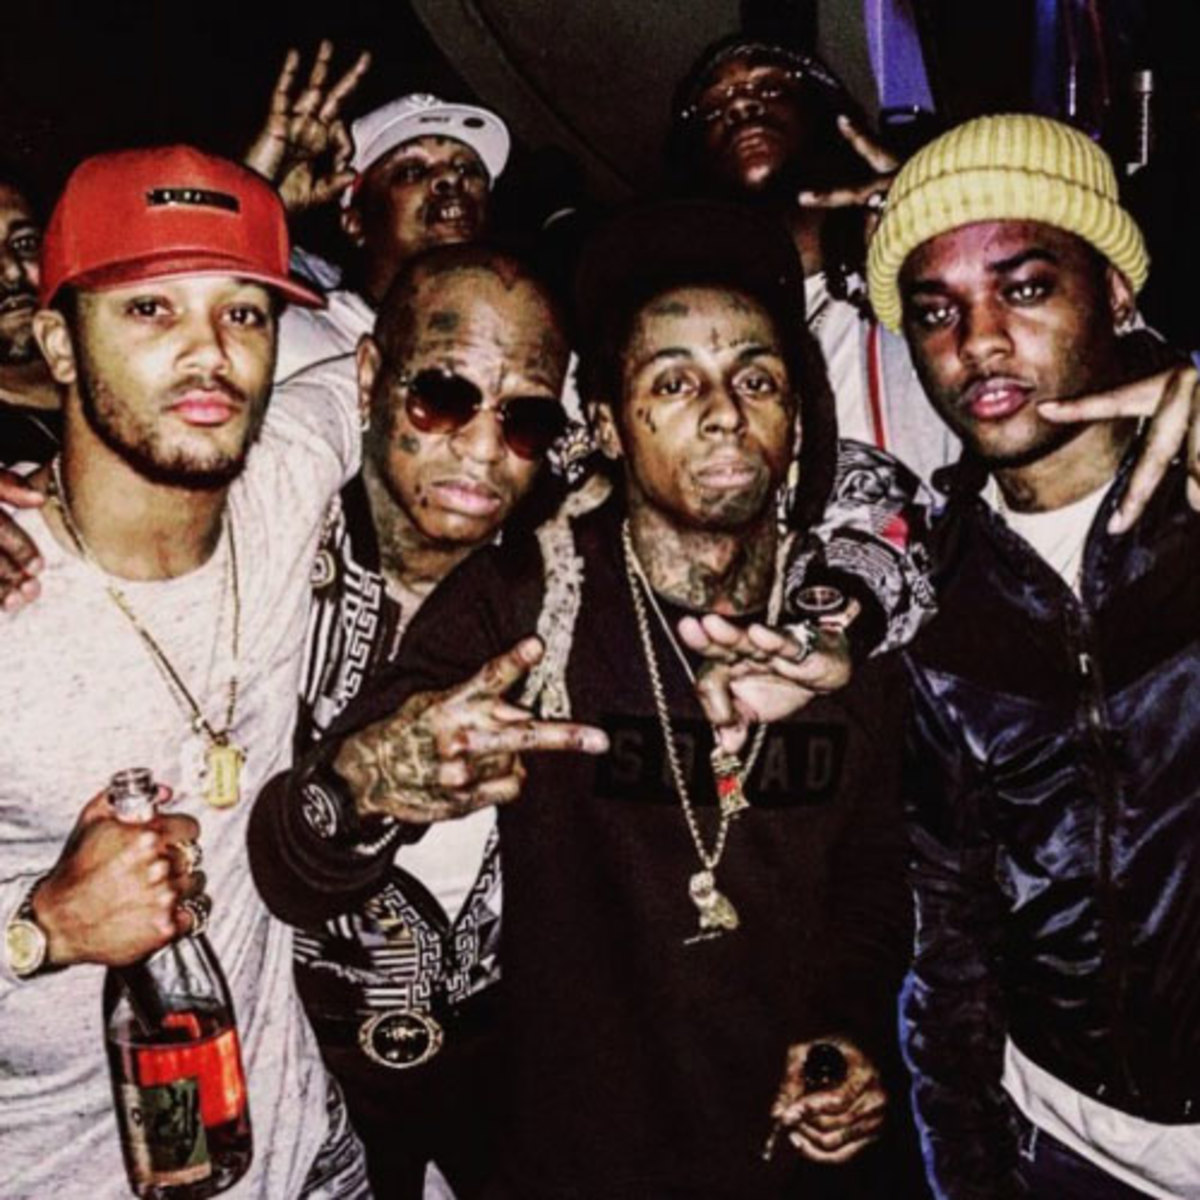 Lil Wayne & Birdman Appear Reunited, But Weezy's Still a Prisoner - DJBooth1200 x 1200